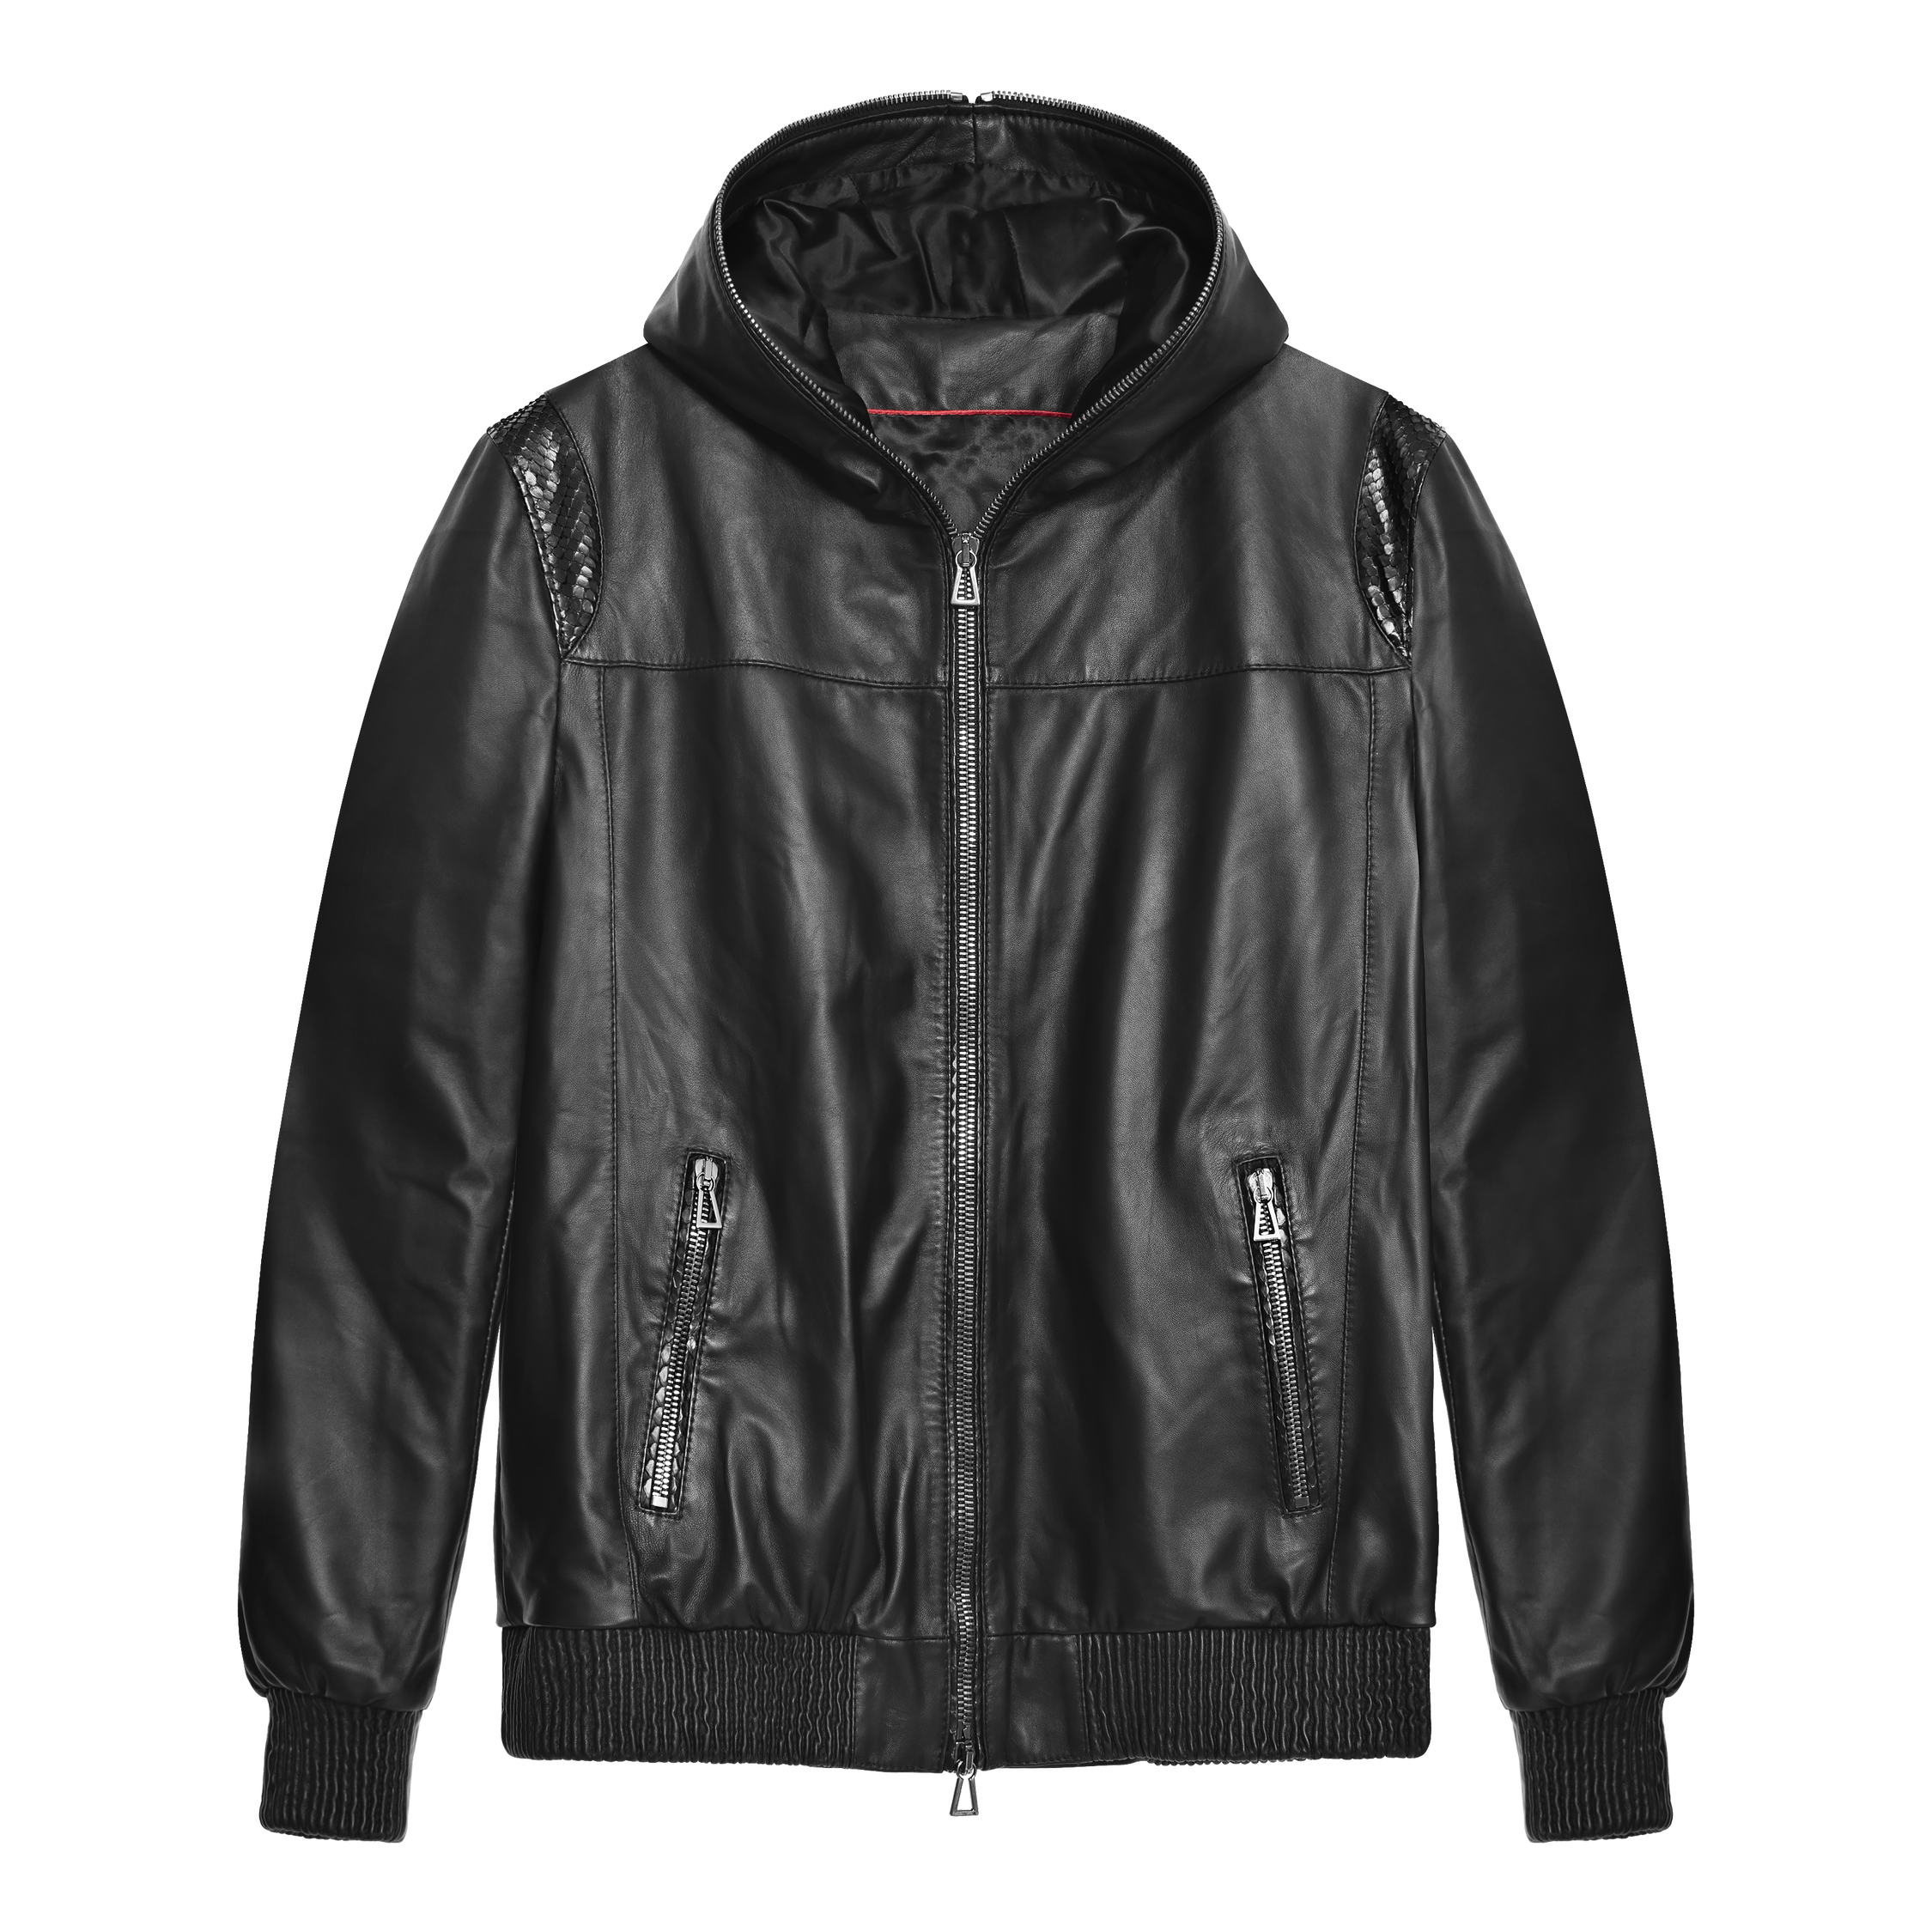 Leather jacket - Berlin by Martin Key